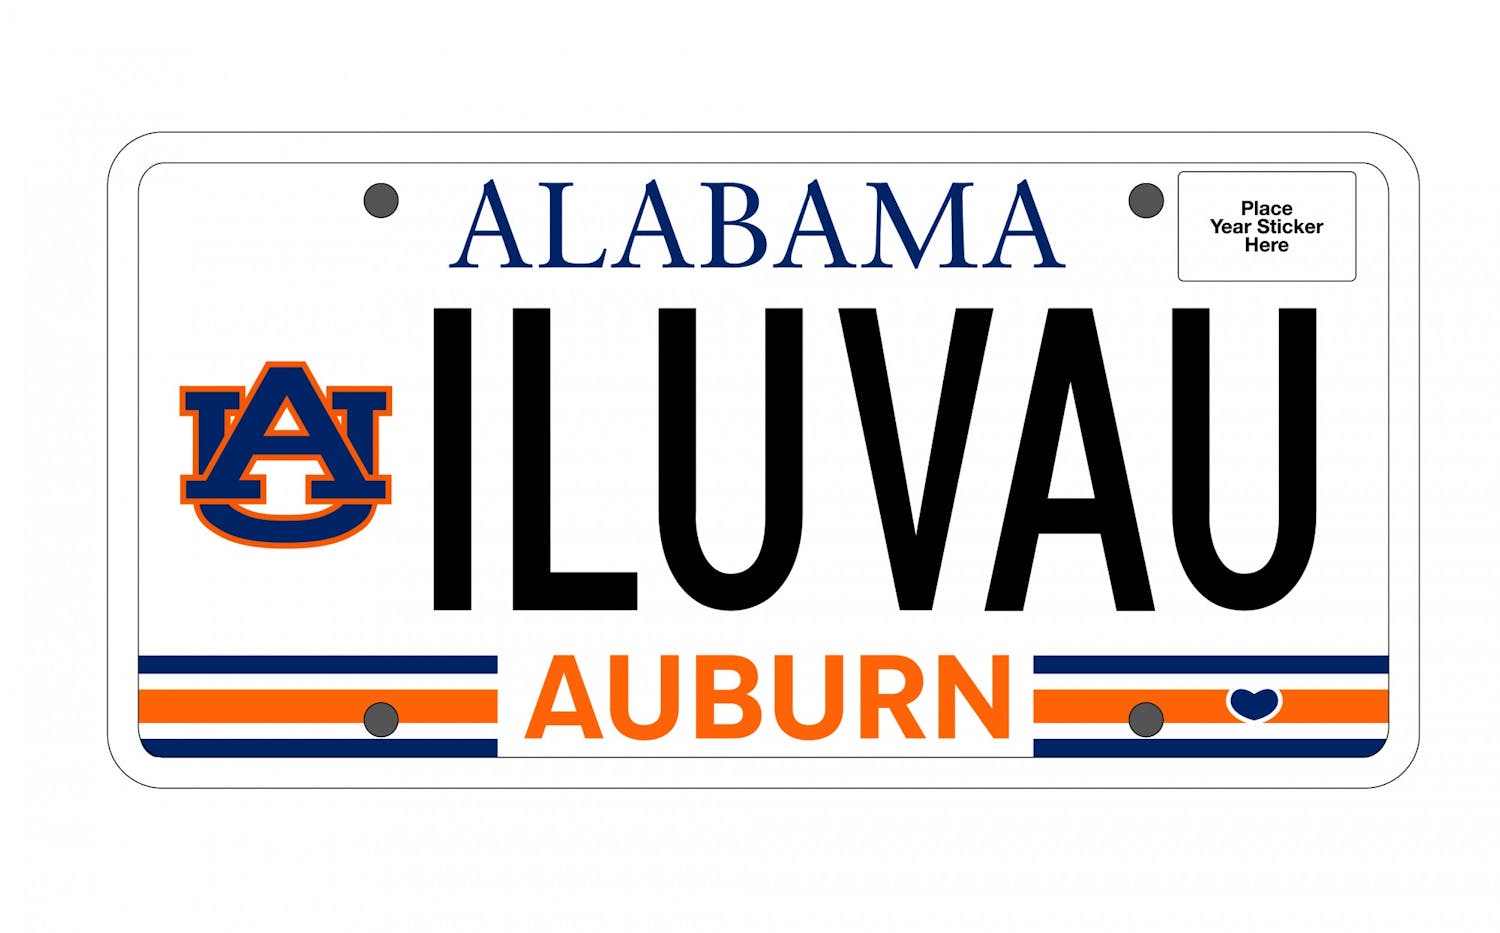 Auburn University has a new collegiate license plate